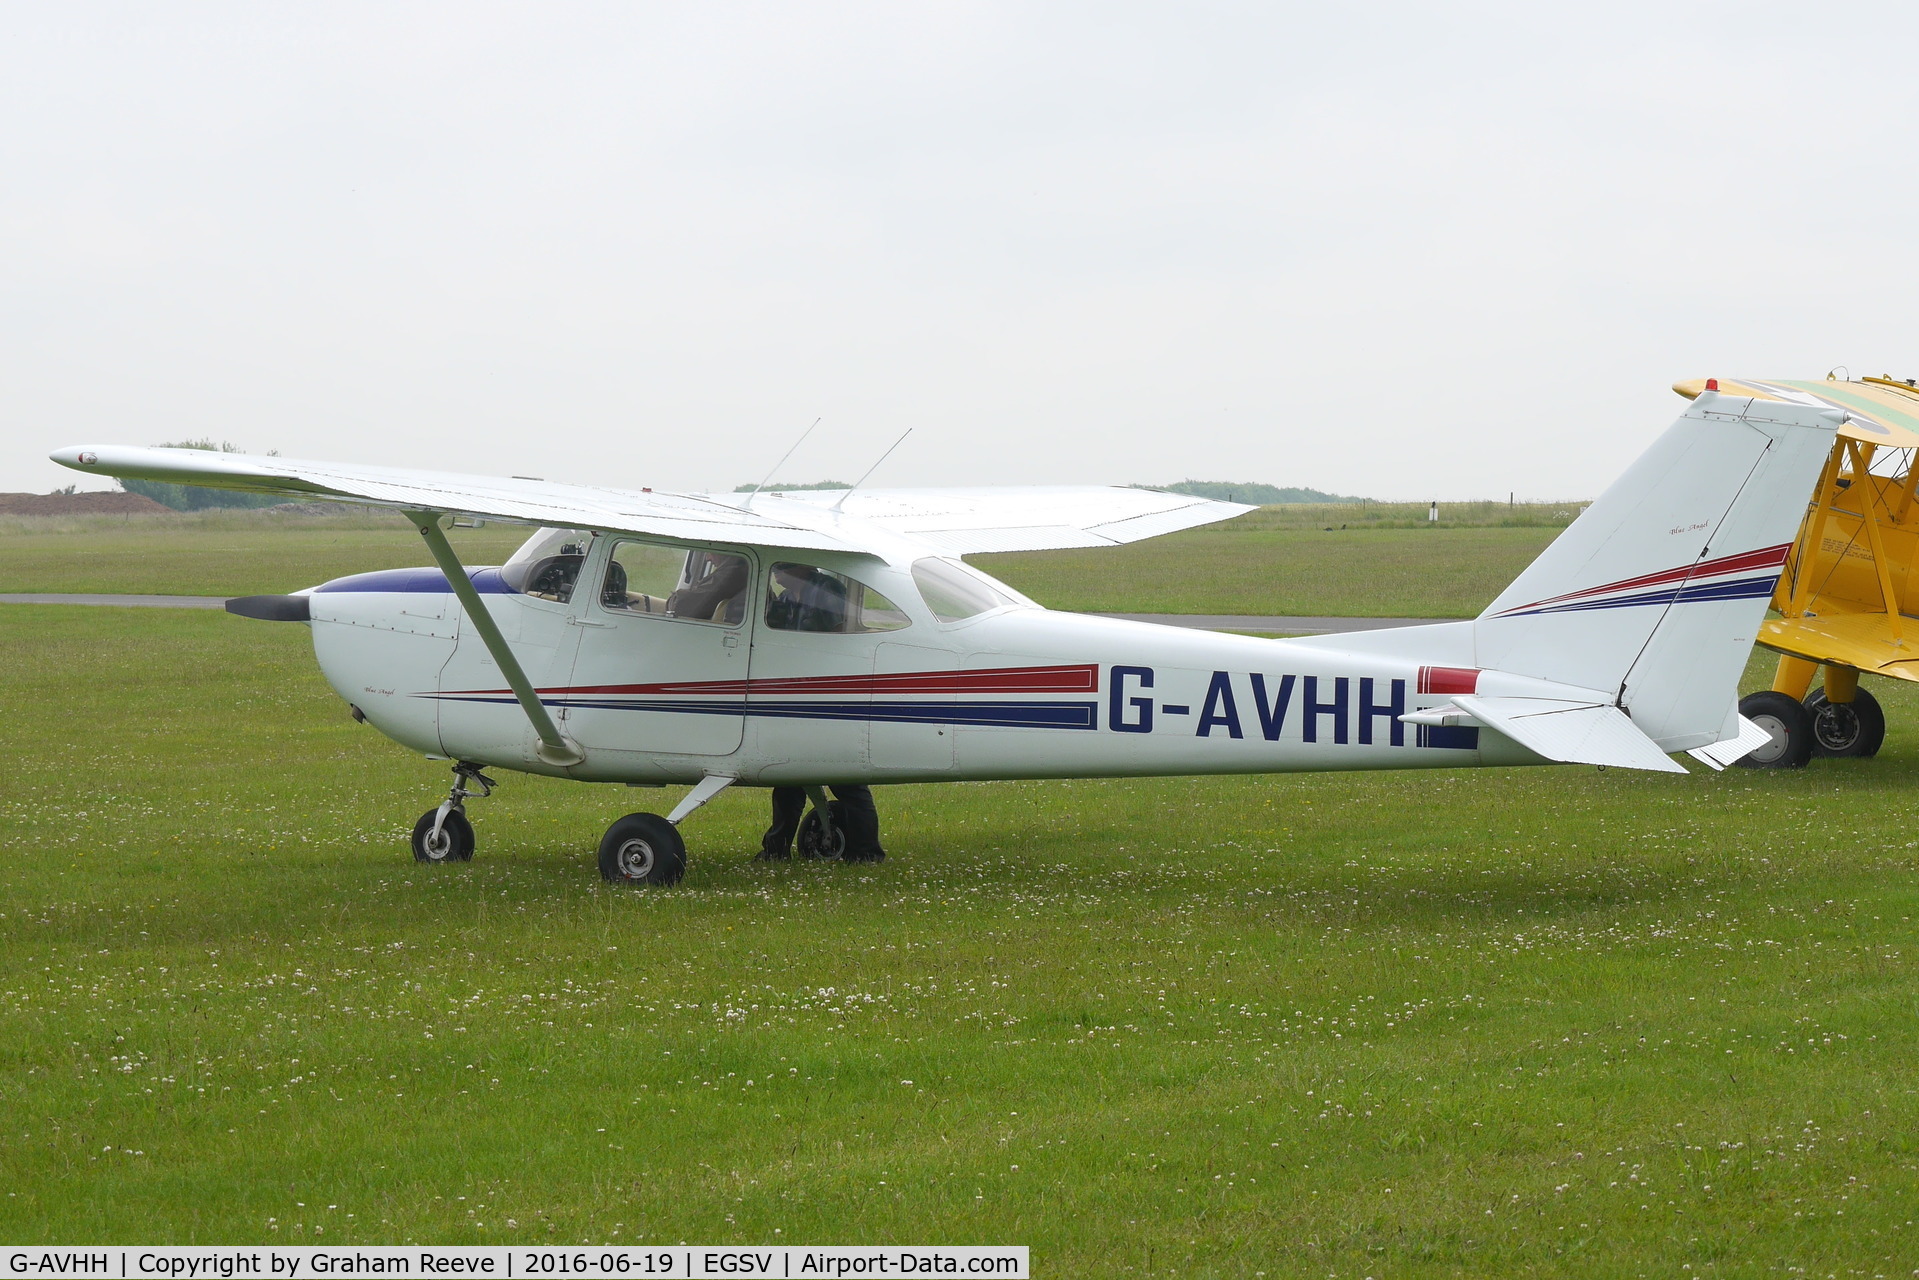 G-AVHH, 1967 Reims F172H Skyhawk C/N 0337, Parked at Old Buckenham.